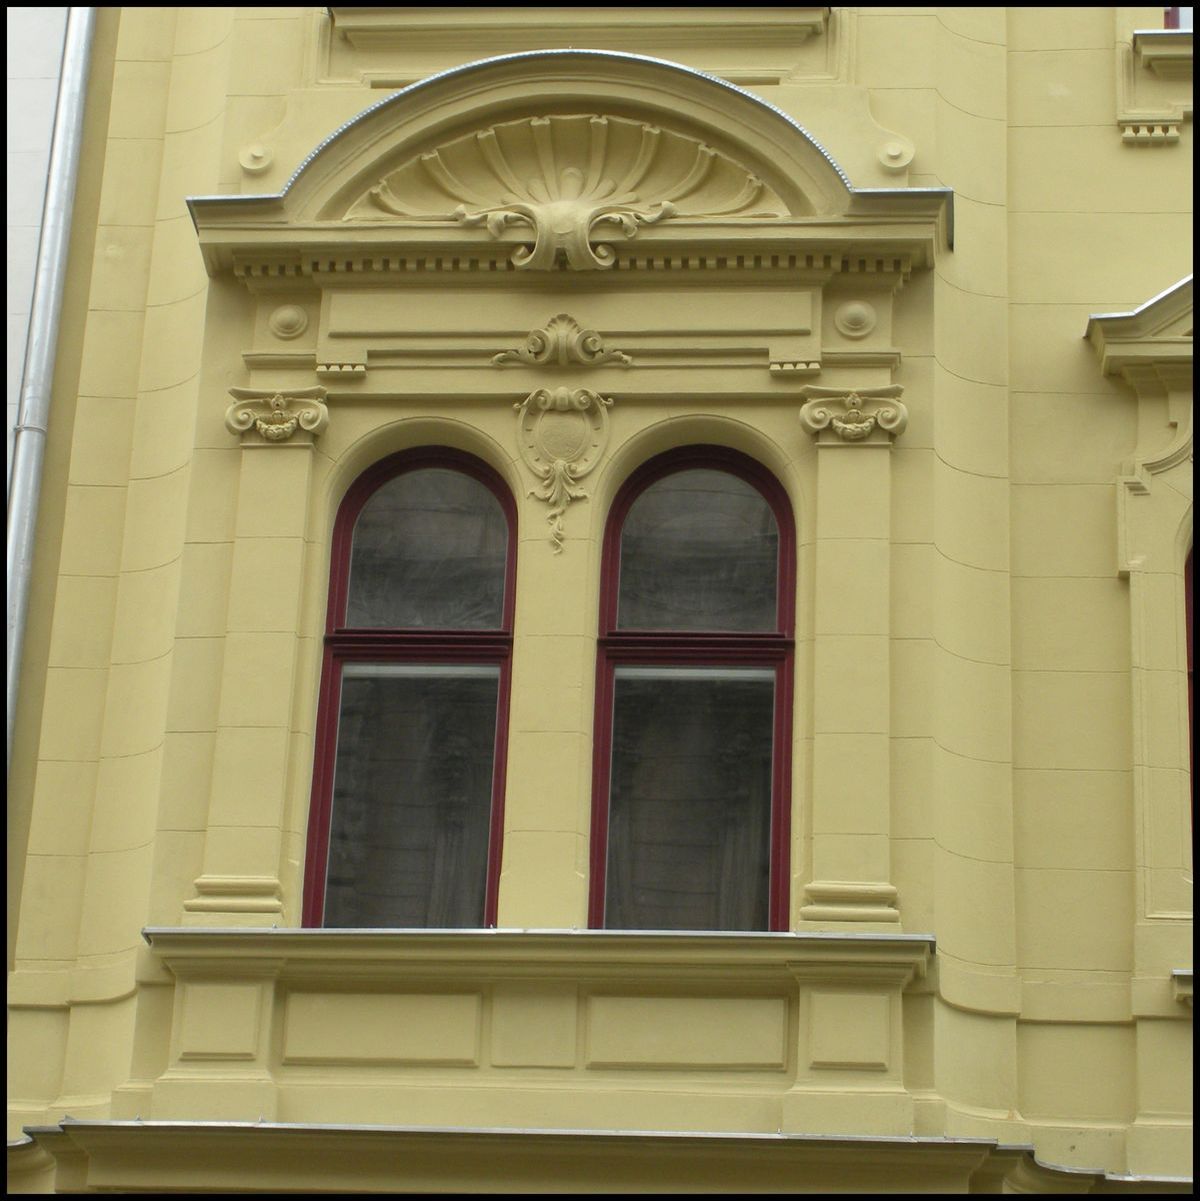 Obloukov kastlov okna eln fasdy vzhledem shodn s pvodnmi okny - jsou tvoen eurookny IV-68 a jednoduchmi vnitnmi kdly